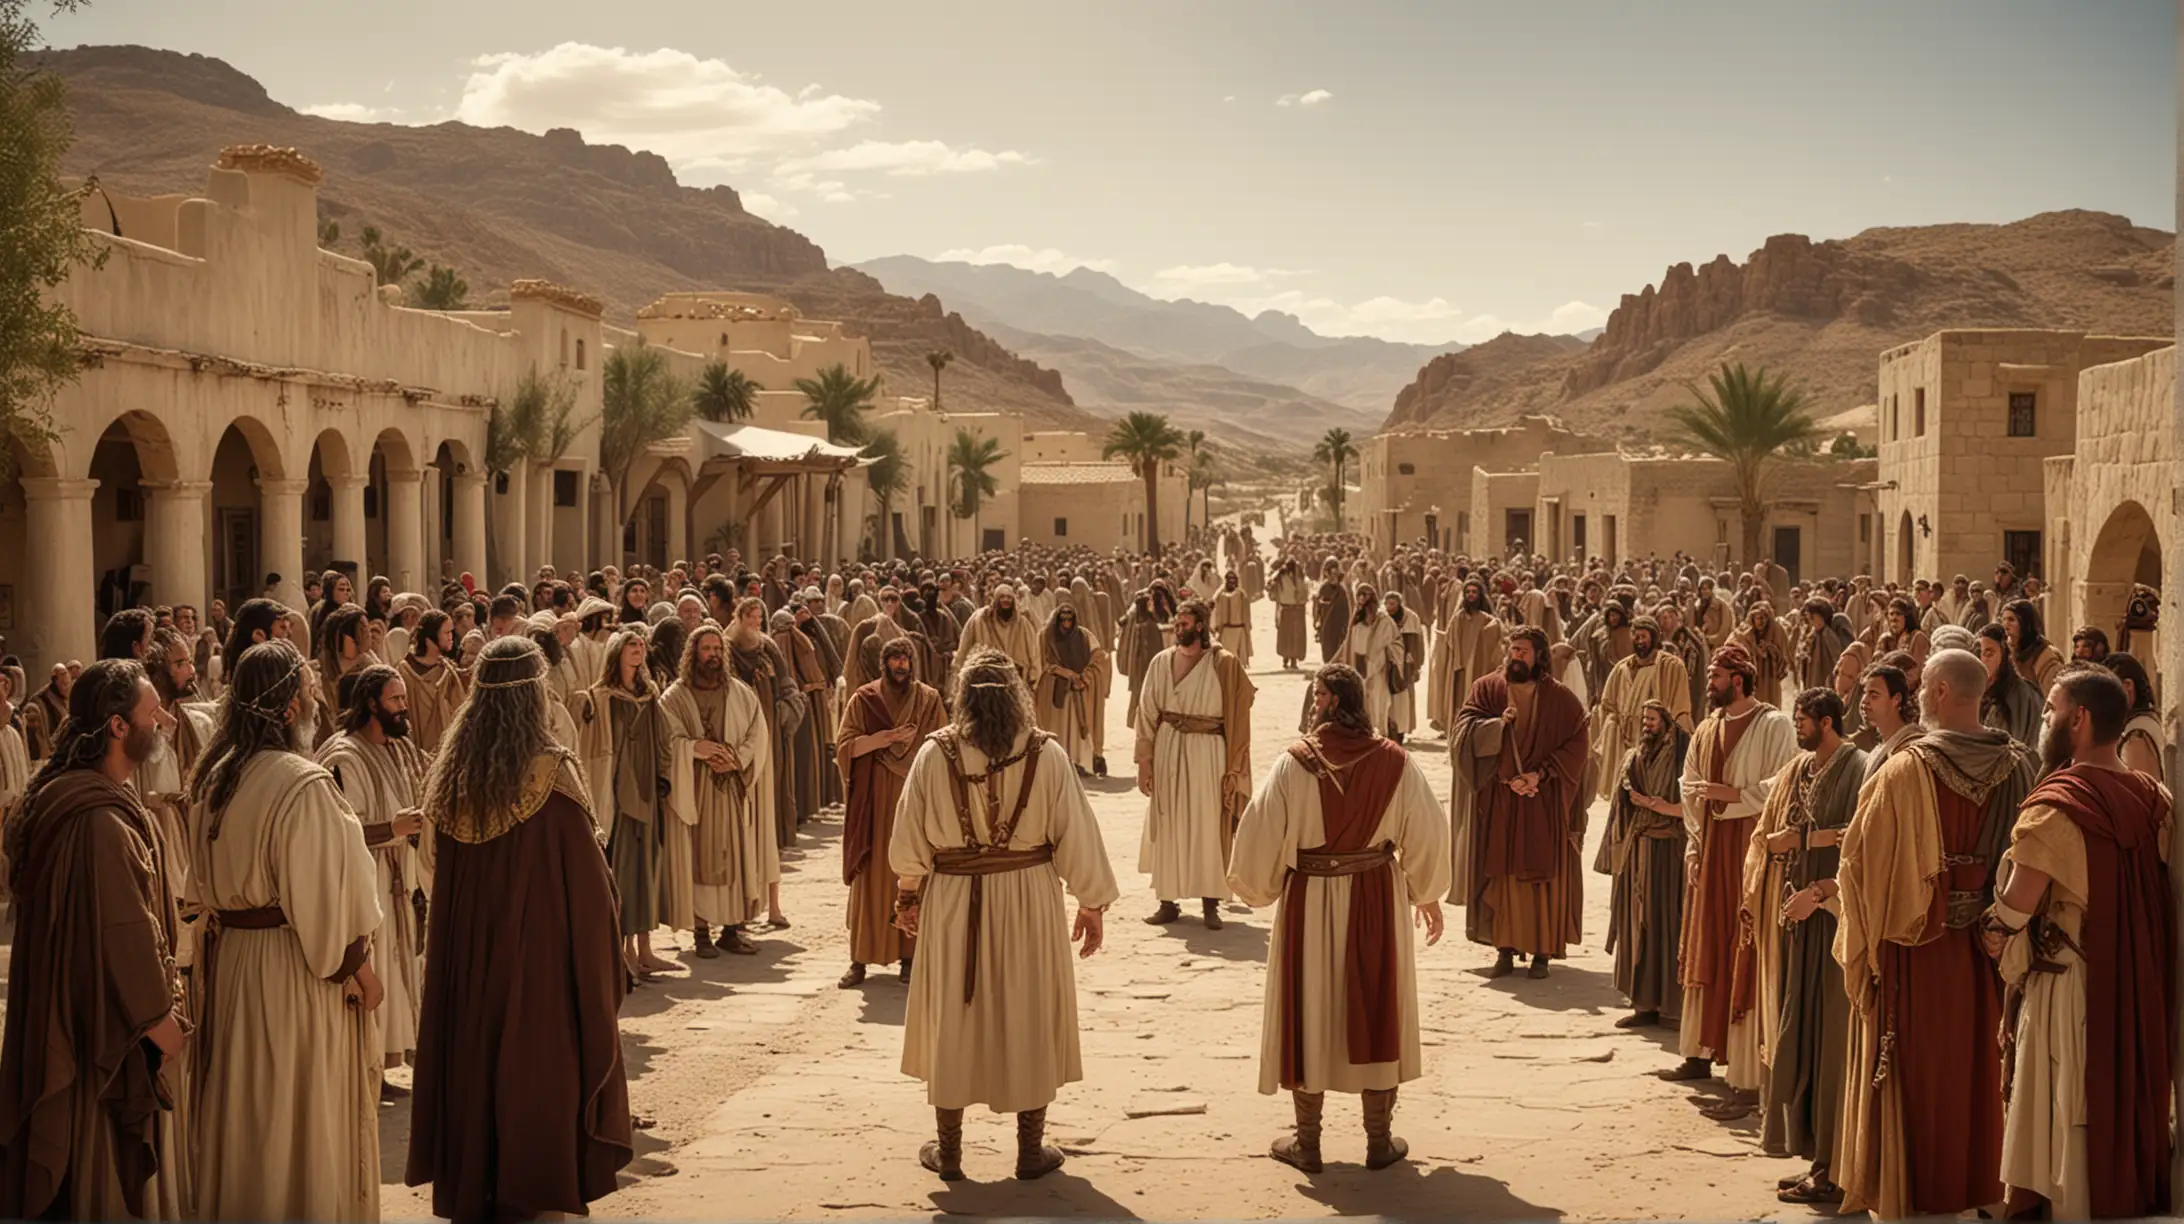 The biblical King David talking to Levitical priests in a Desert Town. Set during the biblical era of King David.